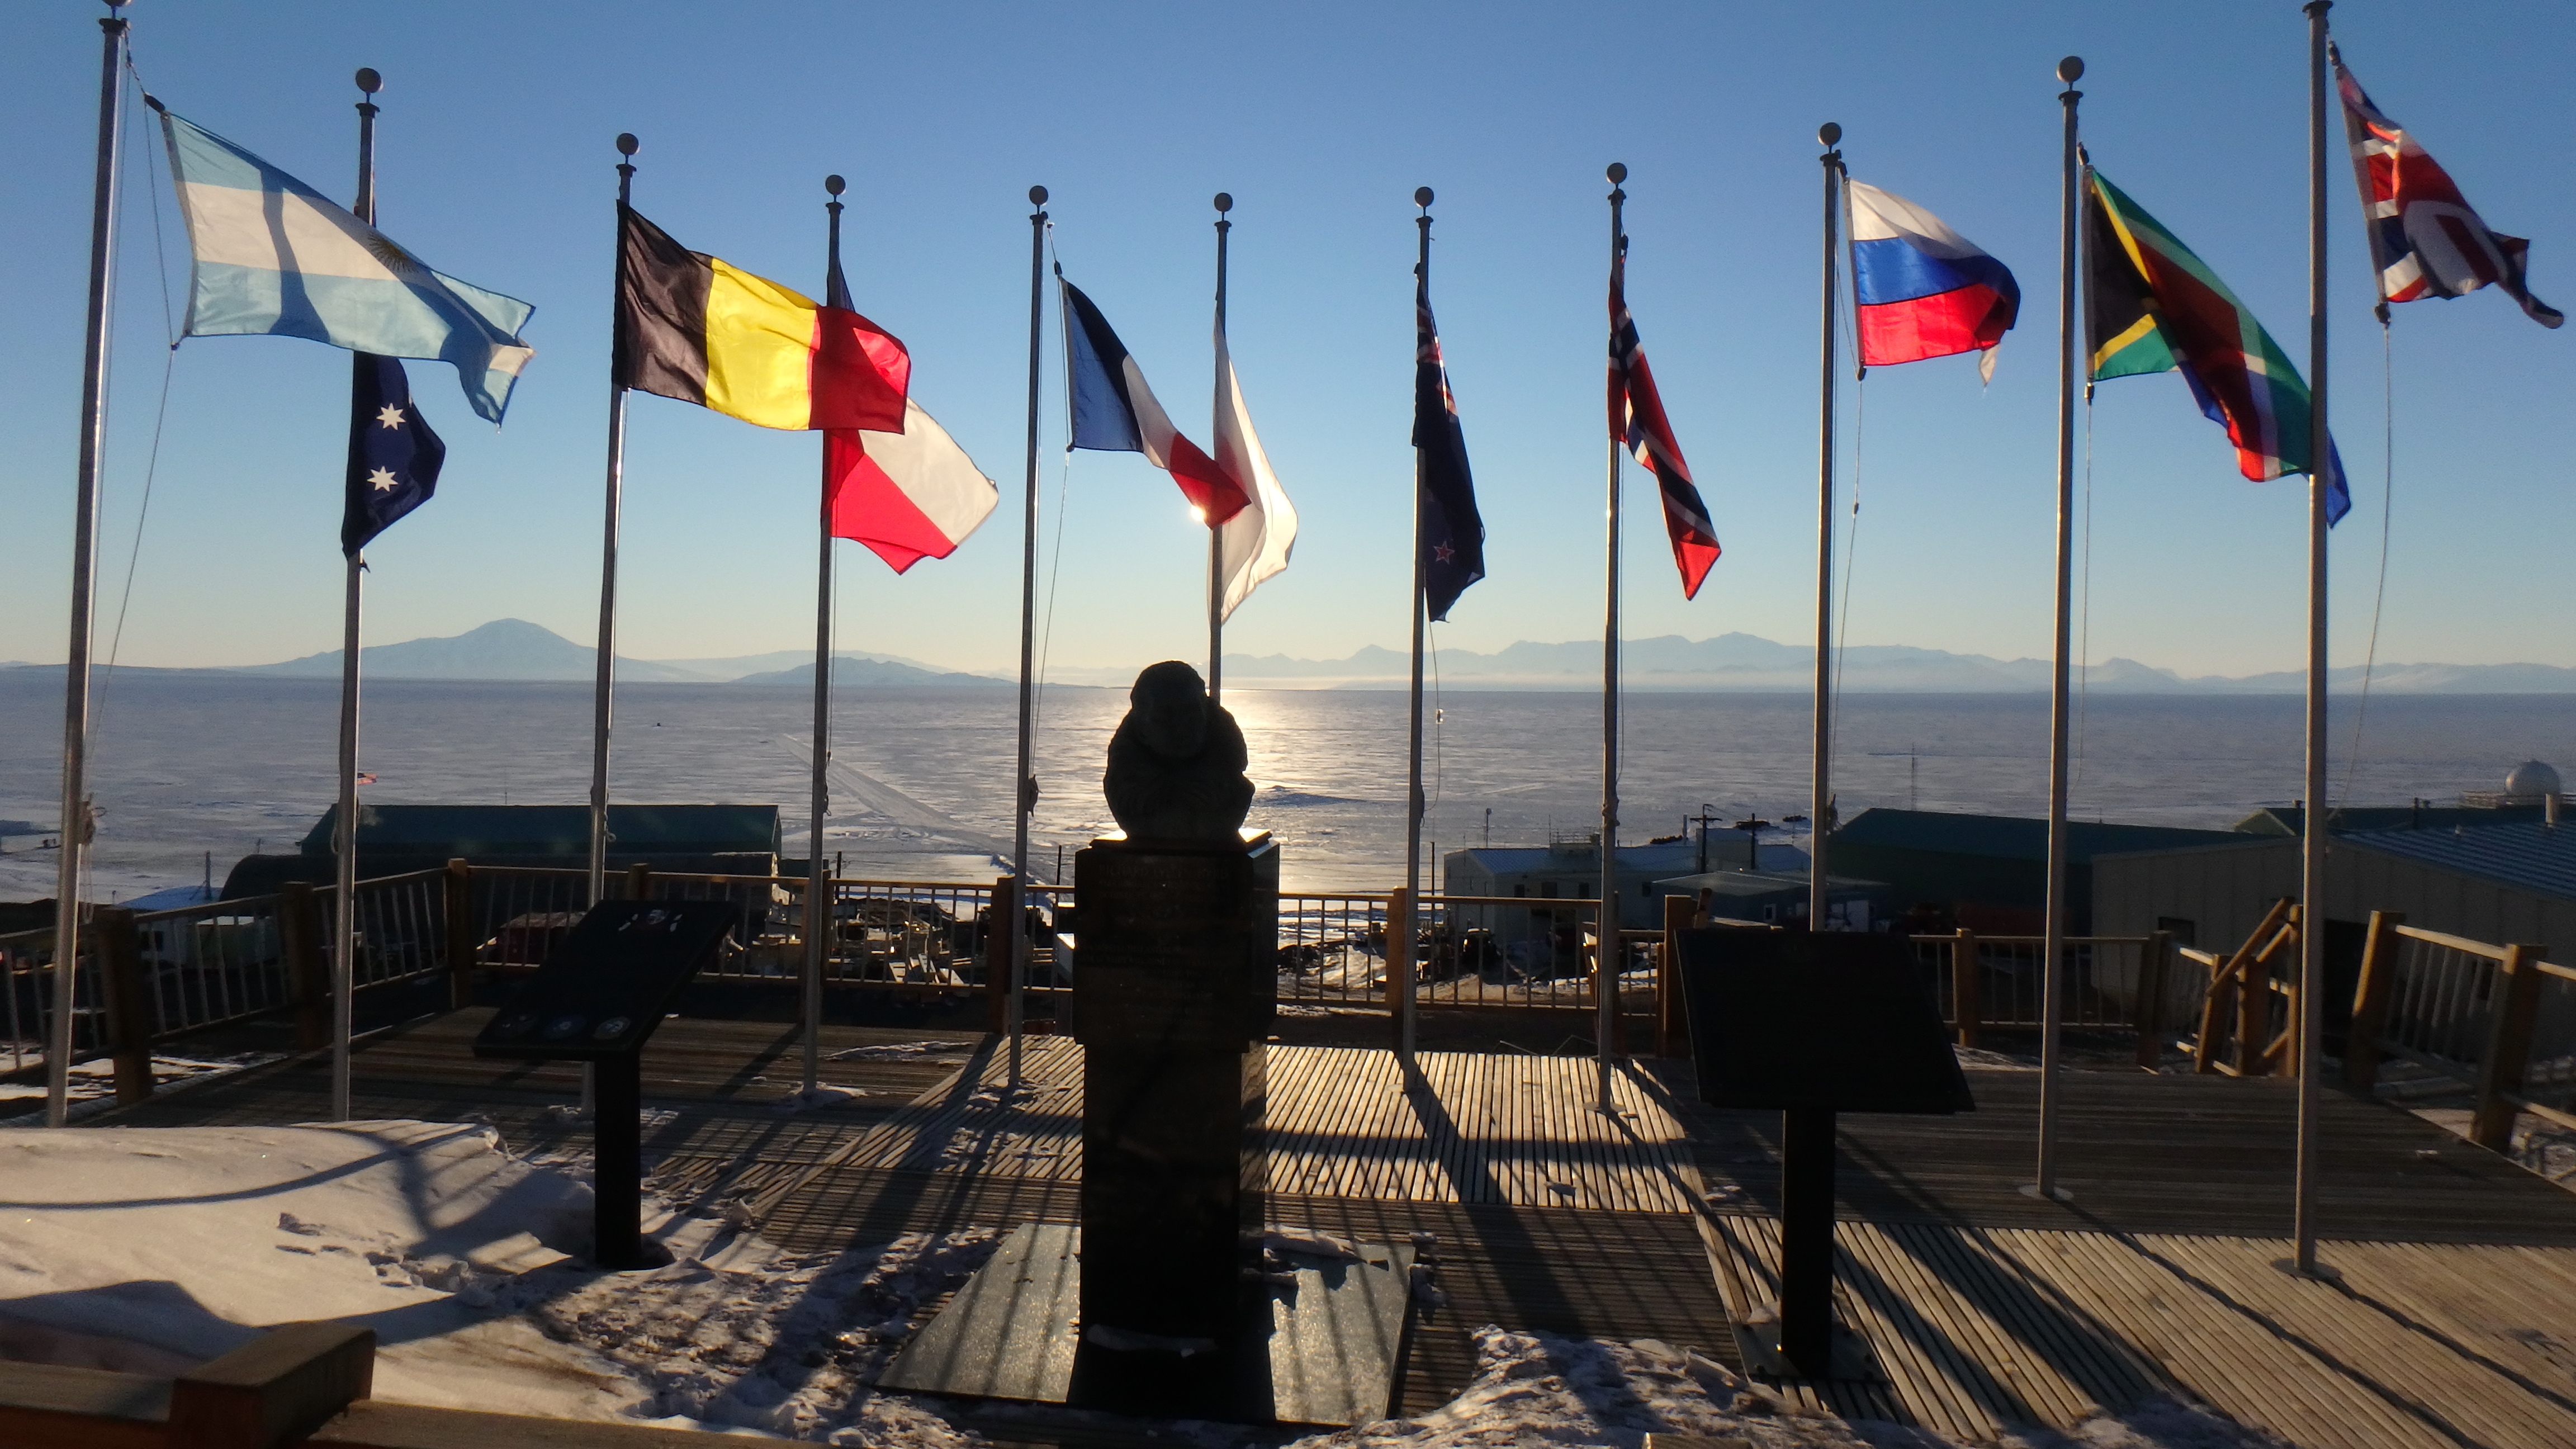 The flags of the original twelve signatory nations of the Antarctic Treaty